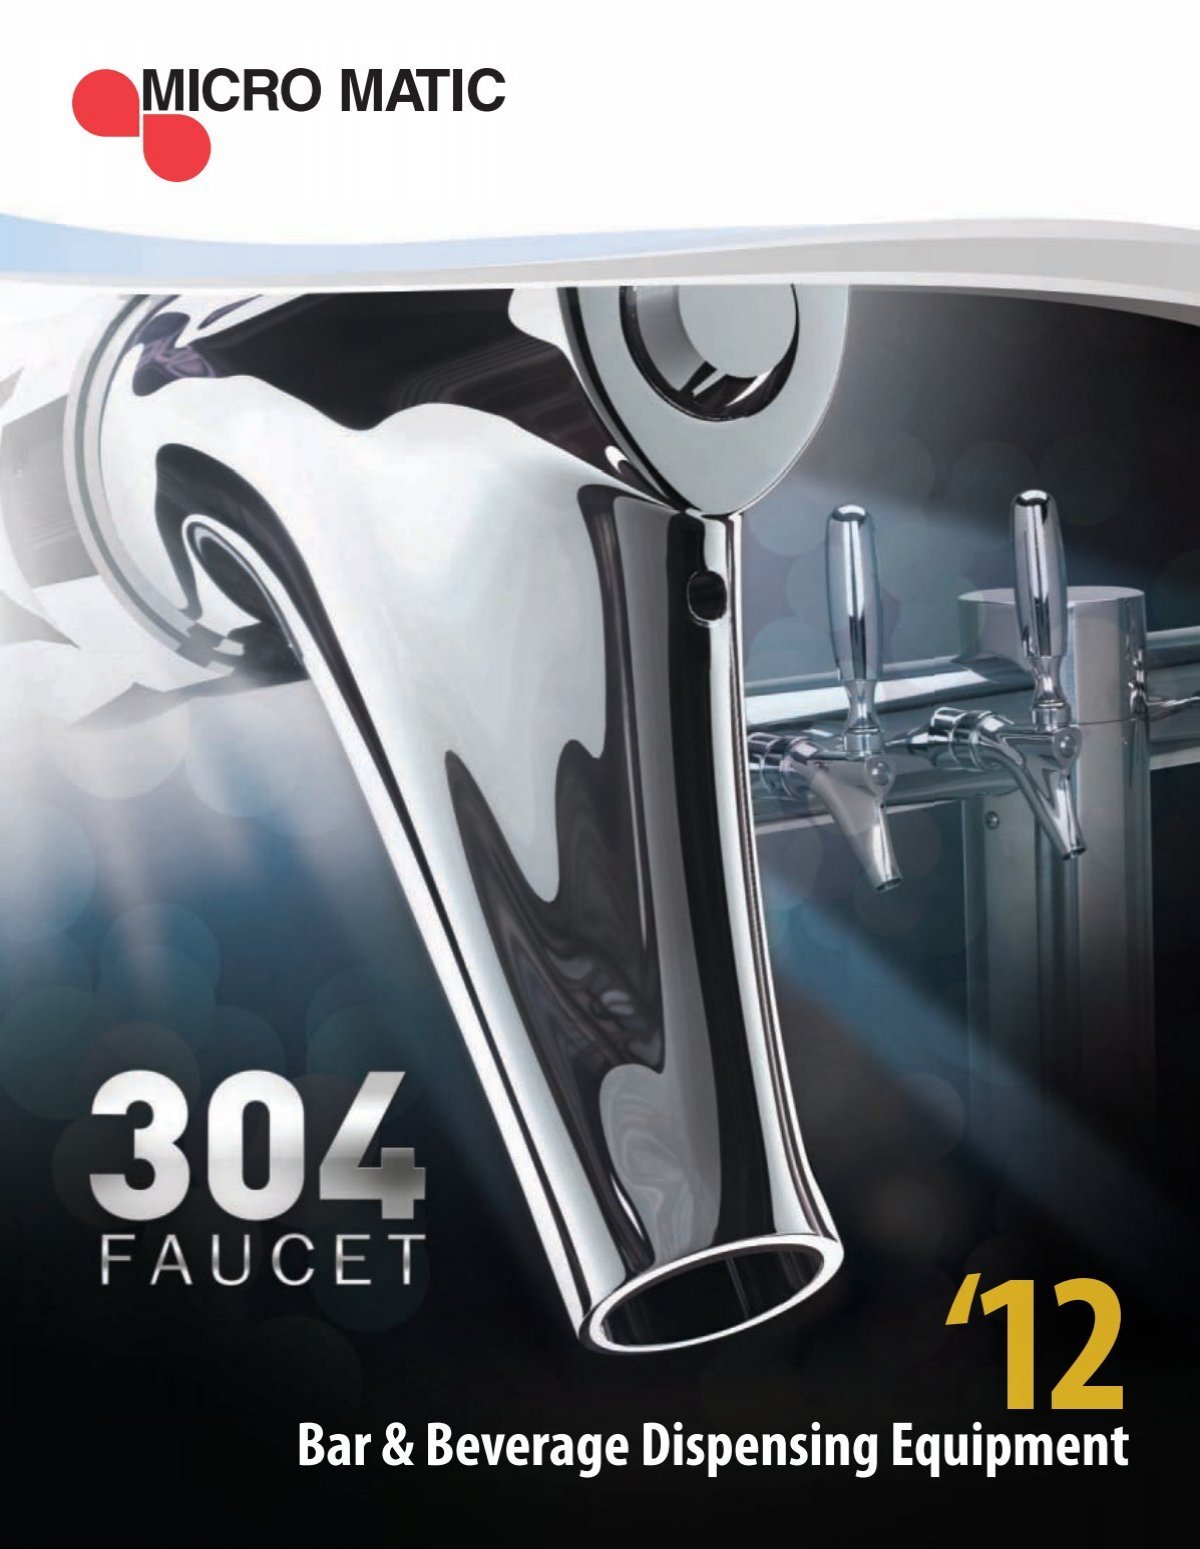 Ball Aluminum Everyday Logo Stocked Print Cup, 16 Ounce Capacity -- 600 per  case